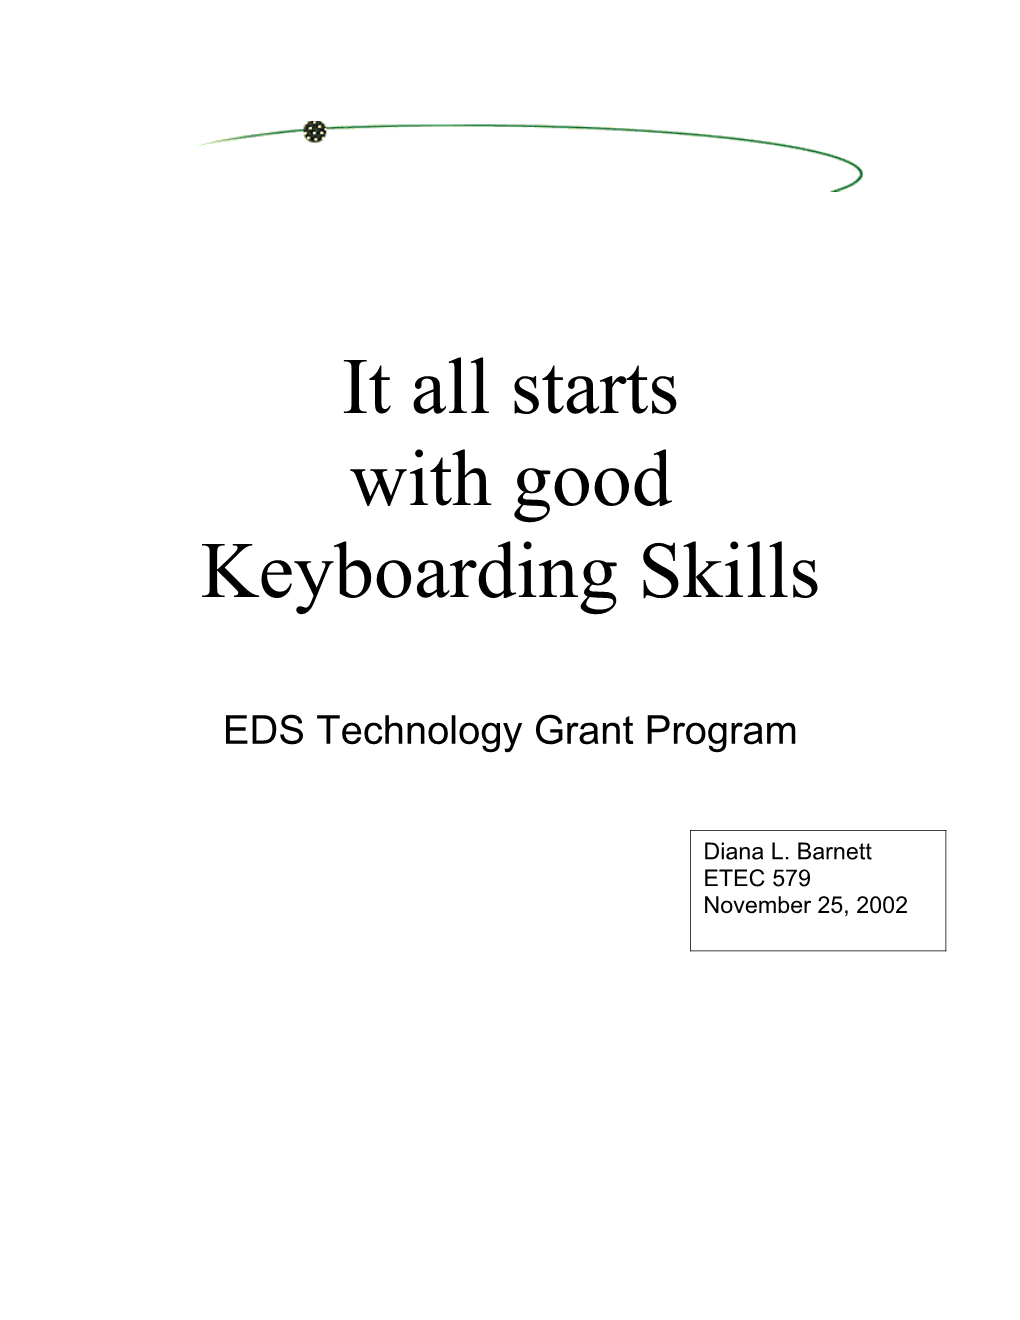 Keyboarding Software Grant Proposal